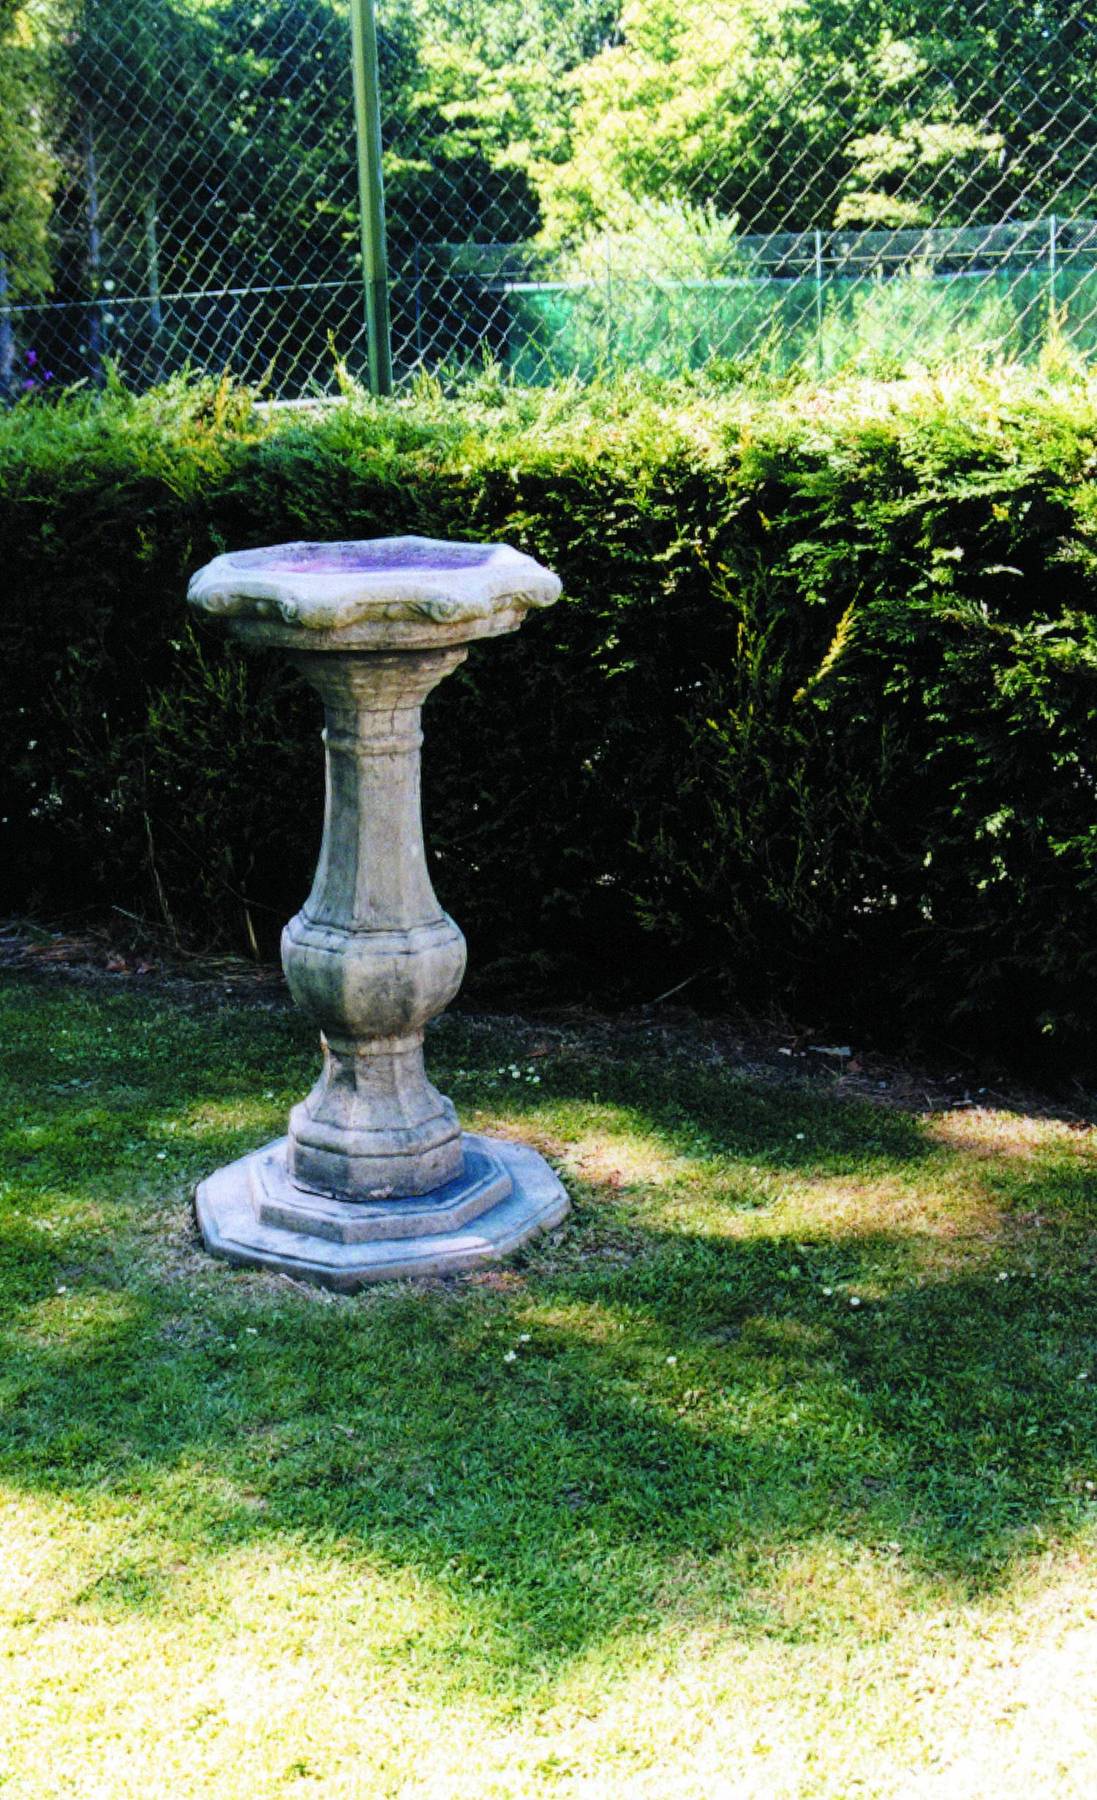 Ornate Pedestal Stone Birdbath